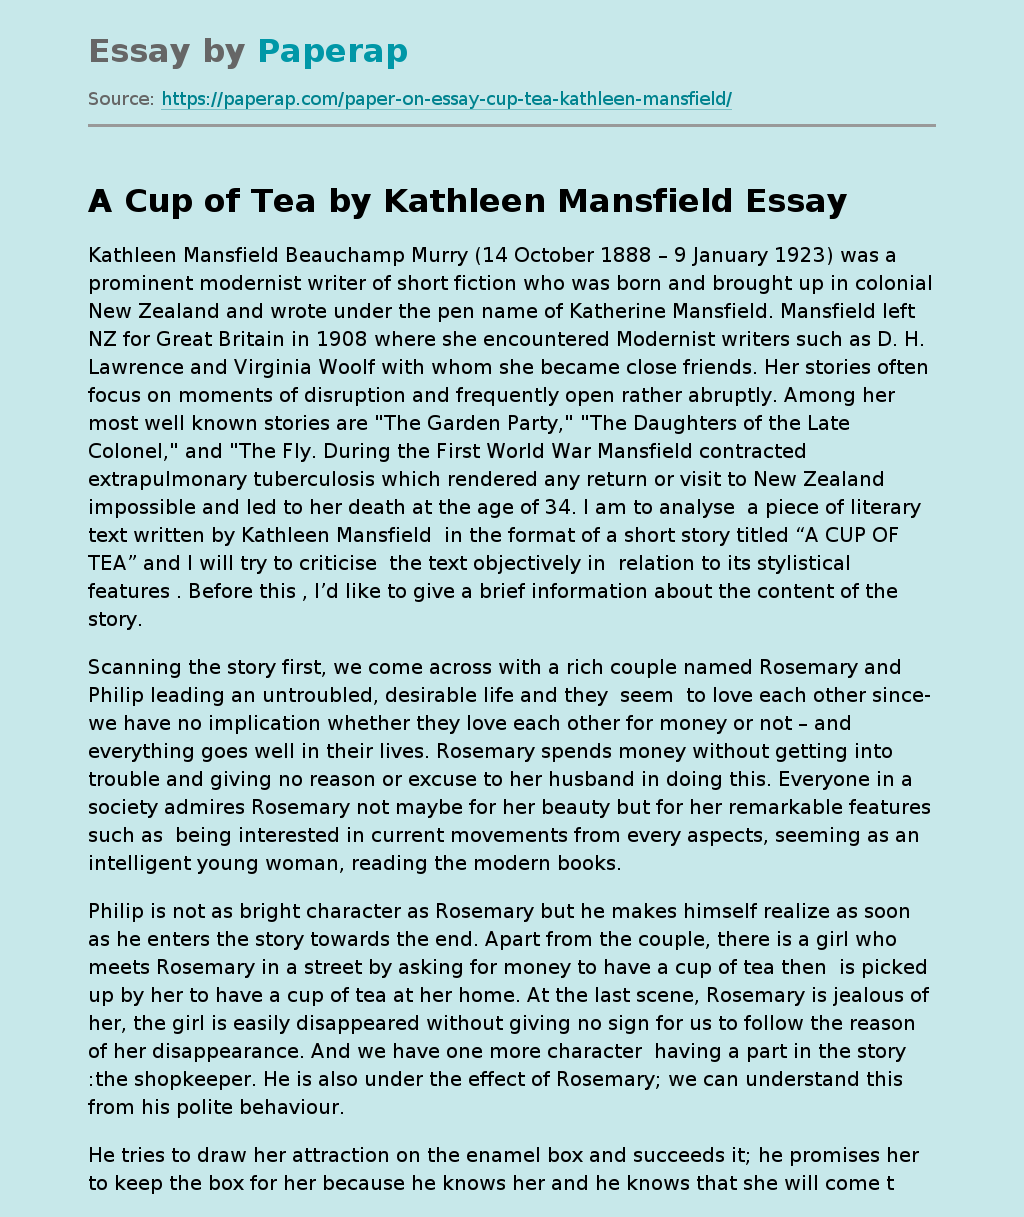 https://paperap.com/wp-content/uploads/essay-thumbnails/paper-on-essay-cup-tea-kathleen-mansfield-post-preview.webp